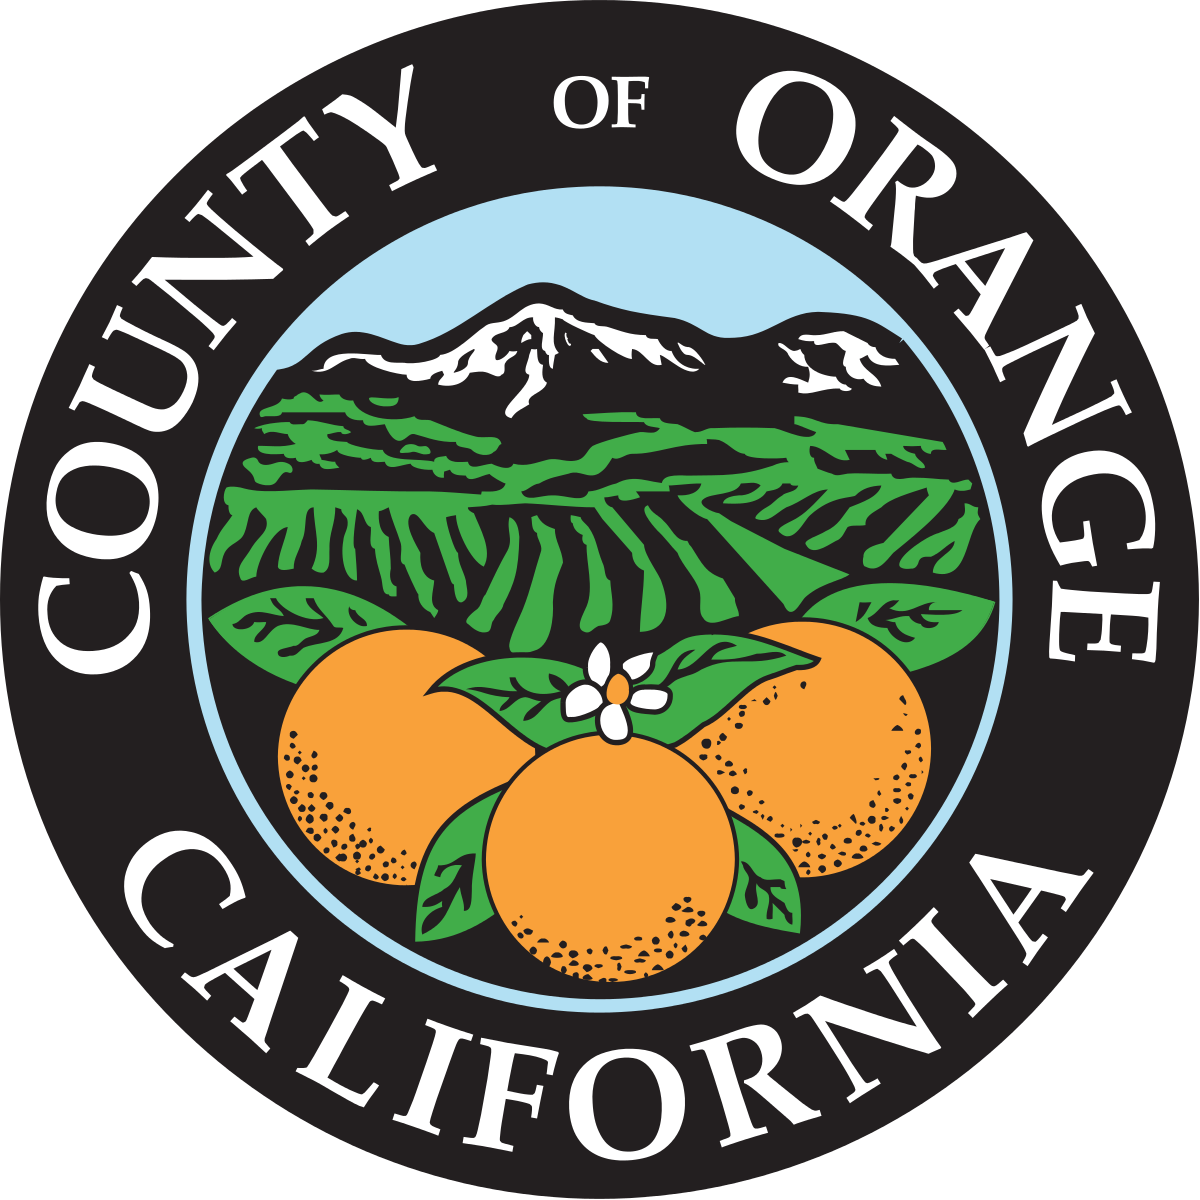 Clariti Customer Story Orange County California